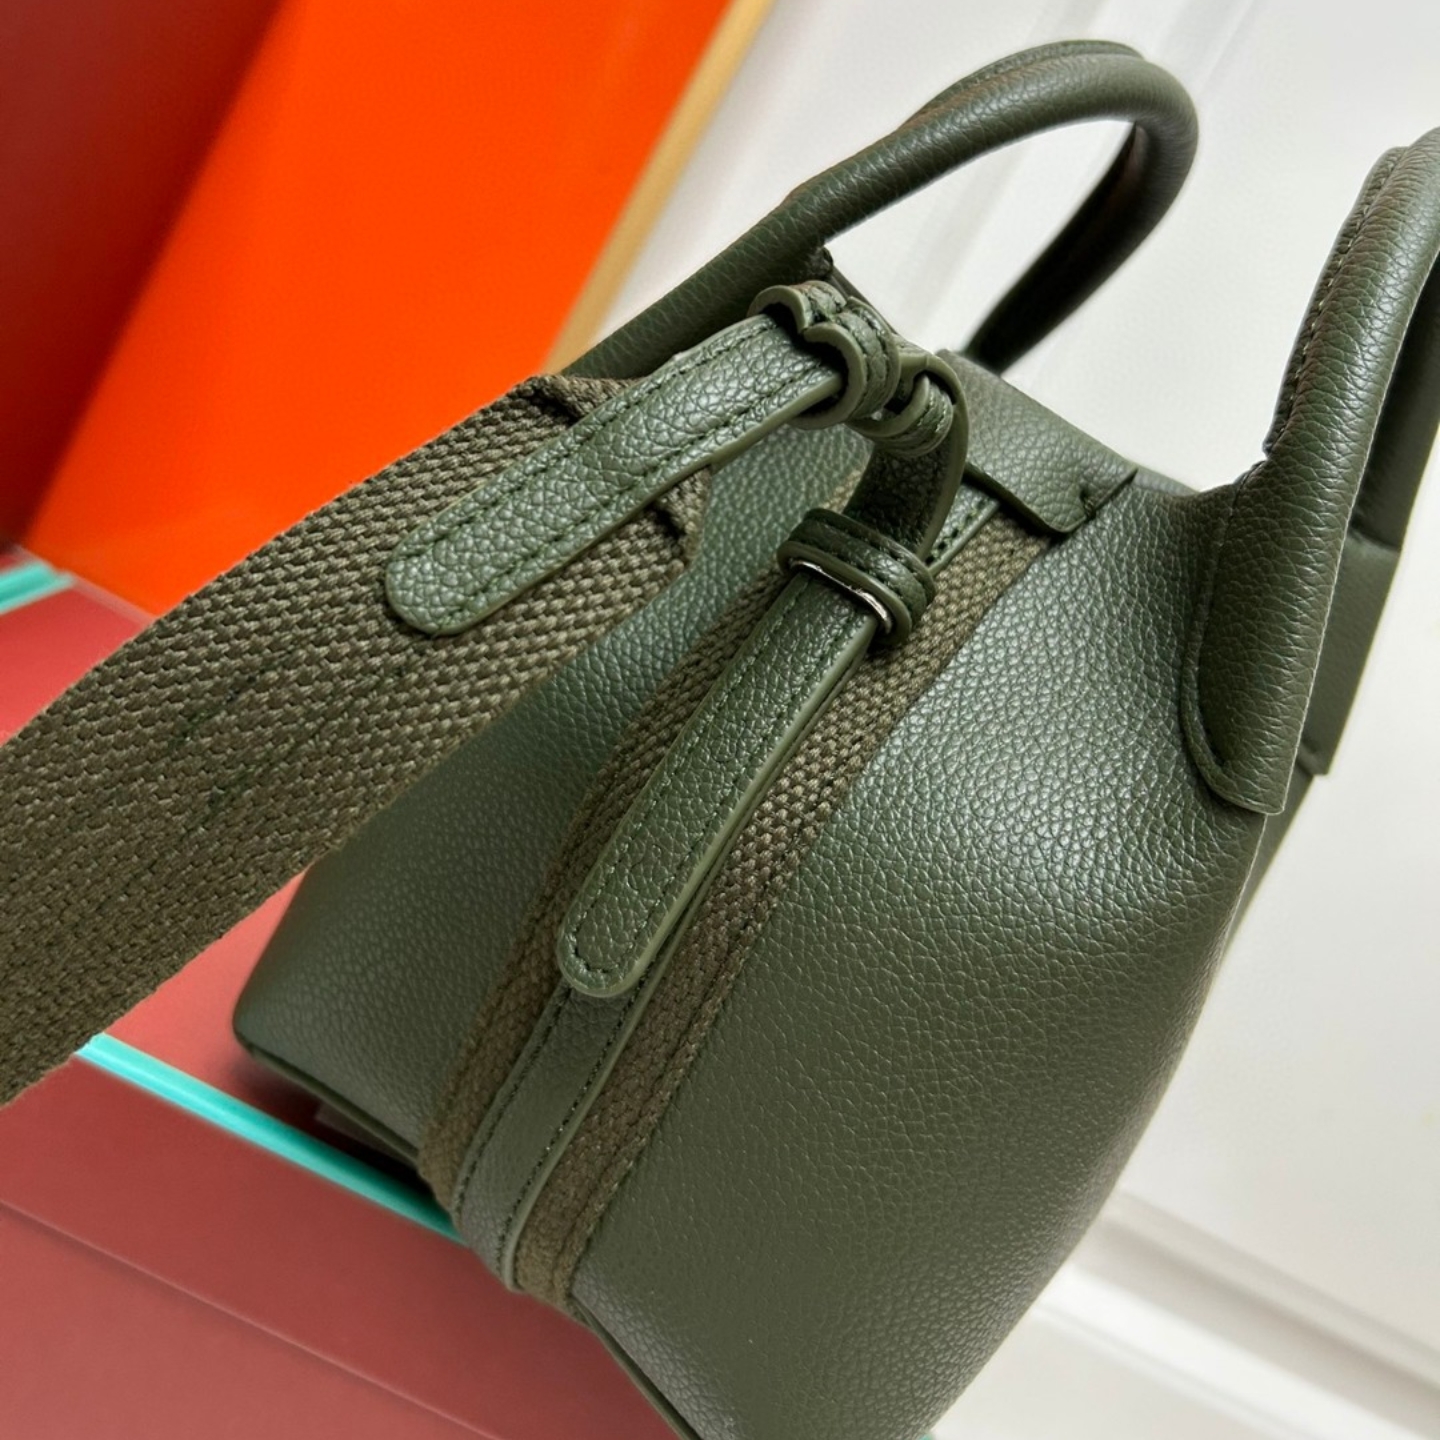 P170-6 جودة عالية الجودة حقيبة الدلو حقيبة الظهر يمكن أن تكون حقيبة يد من الكتف إلى الخلف ، محمولة ، عصرية ، واردة اليومية الحجم 16x14x14cm